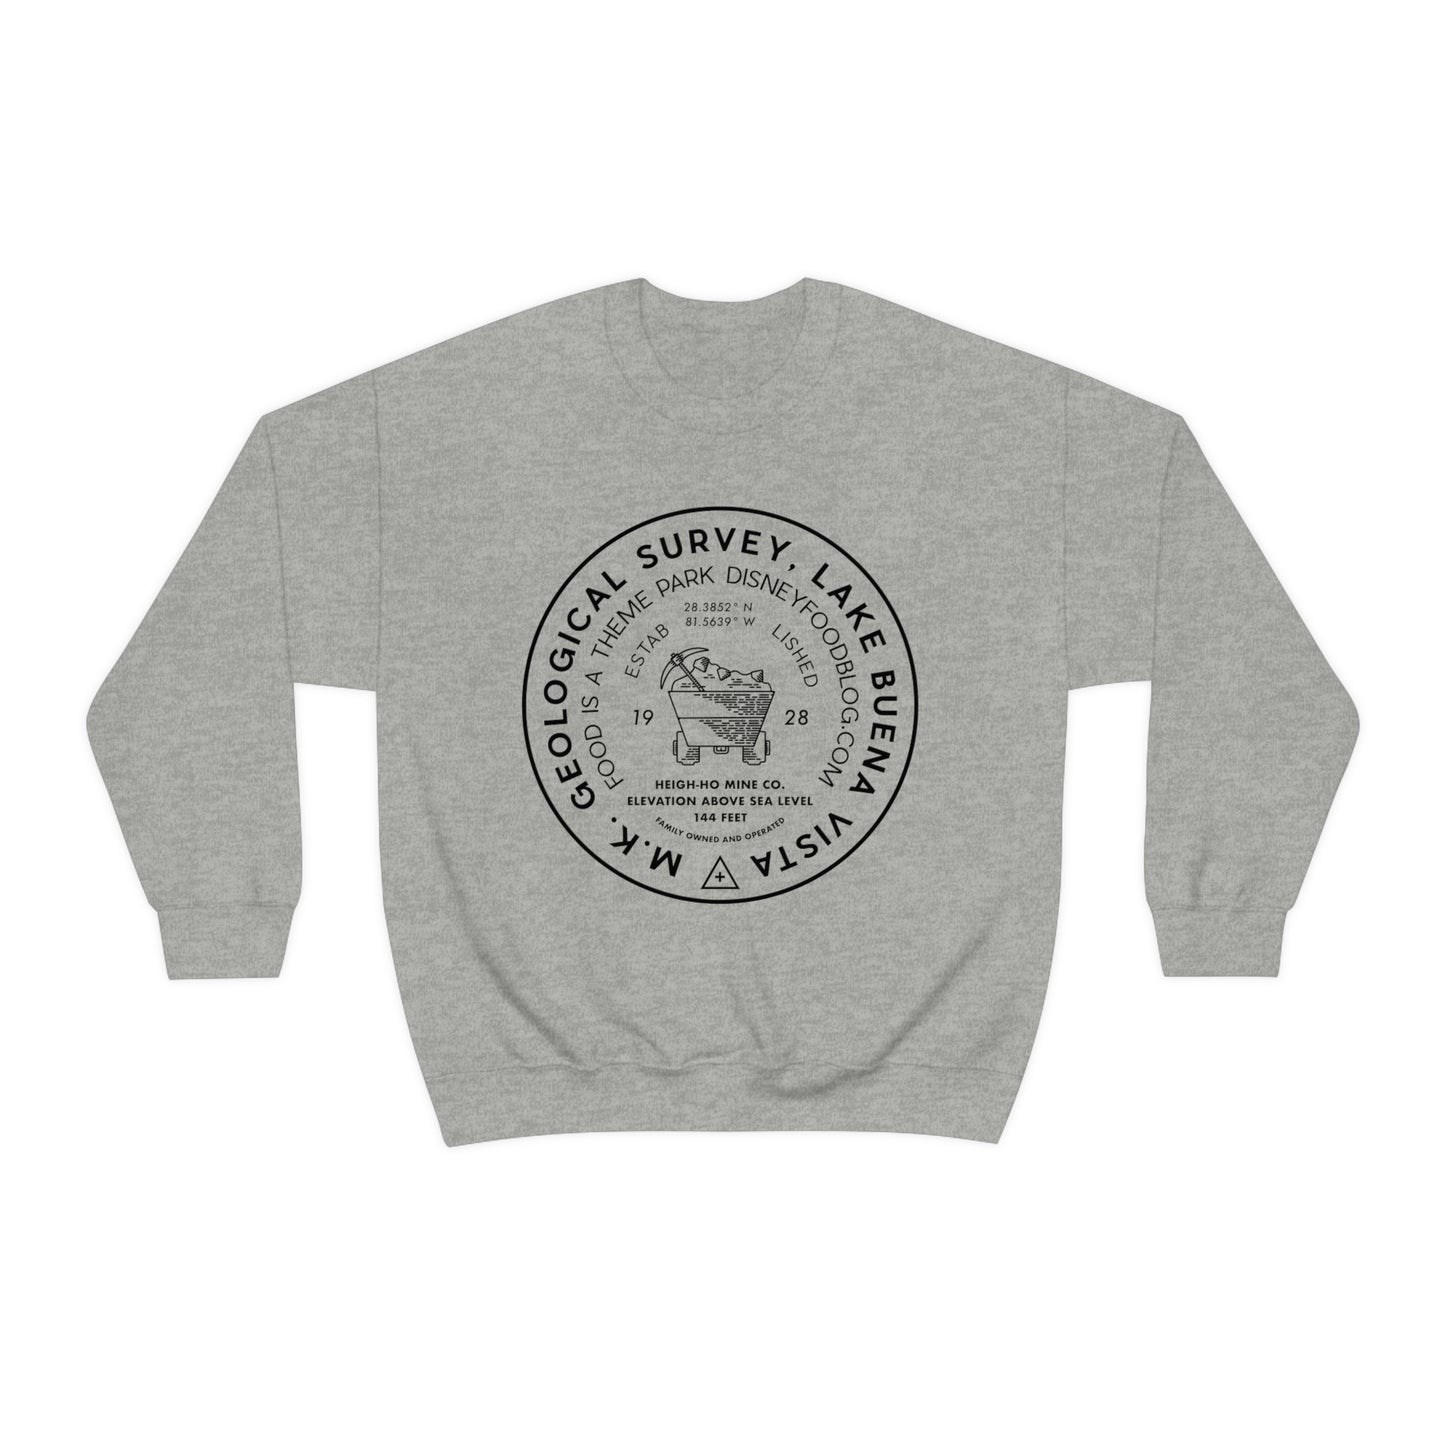 MK Geological Survey - Adult Crewneck Sweatshirt